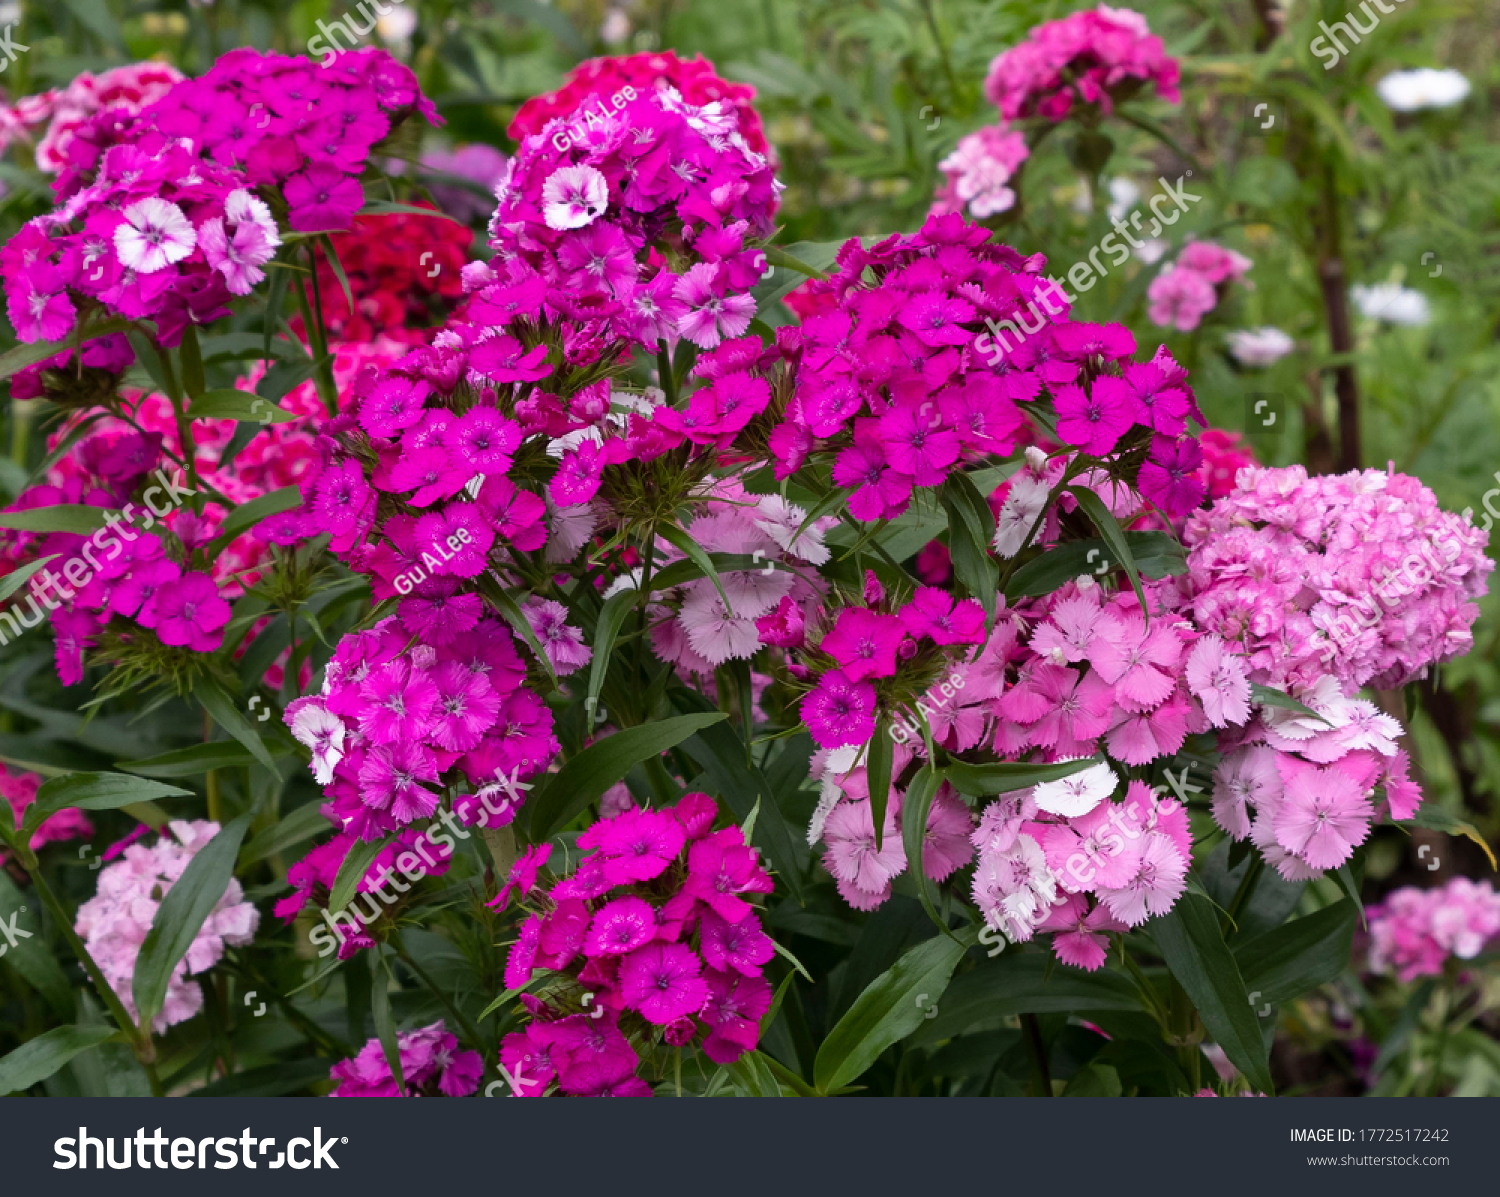 Turkish carnation or barbatus, light and dark pink flowers among the greenery. #1772517242